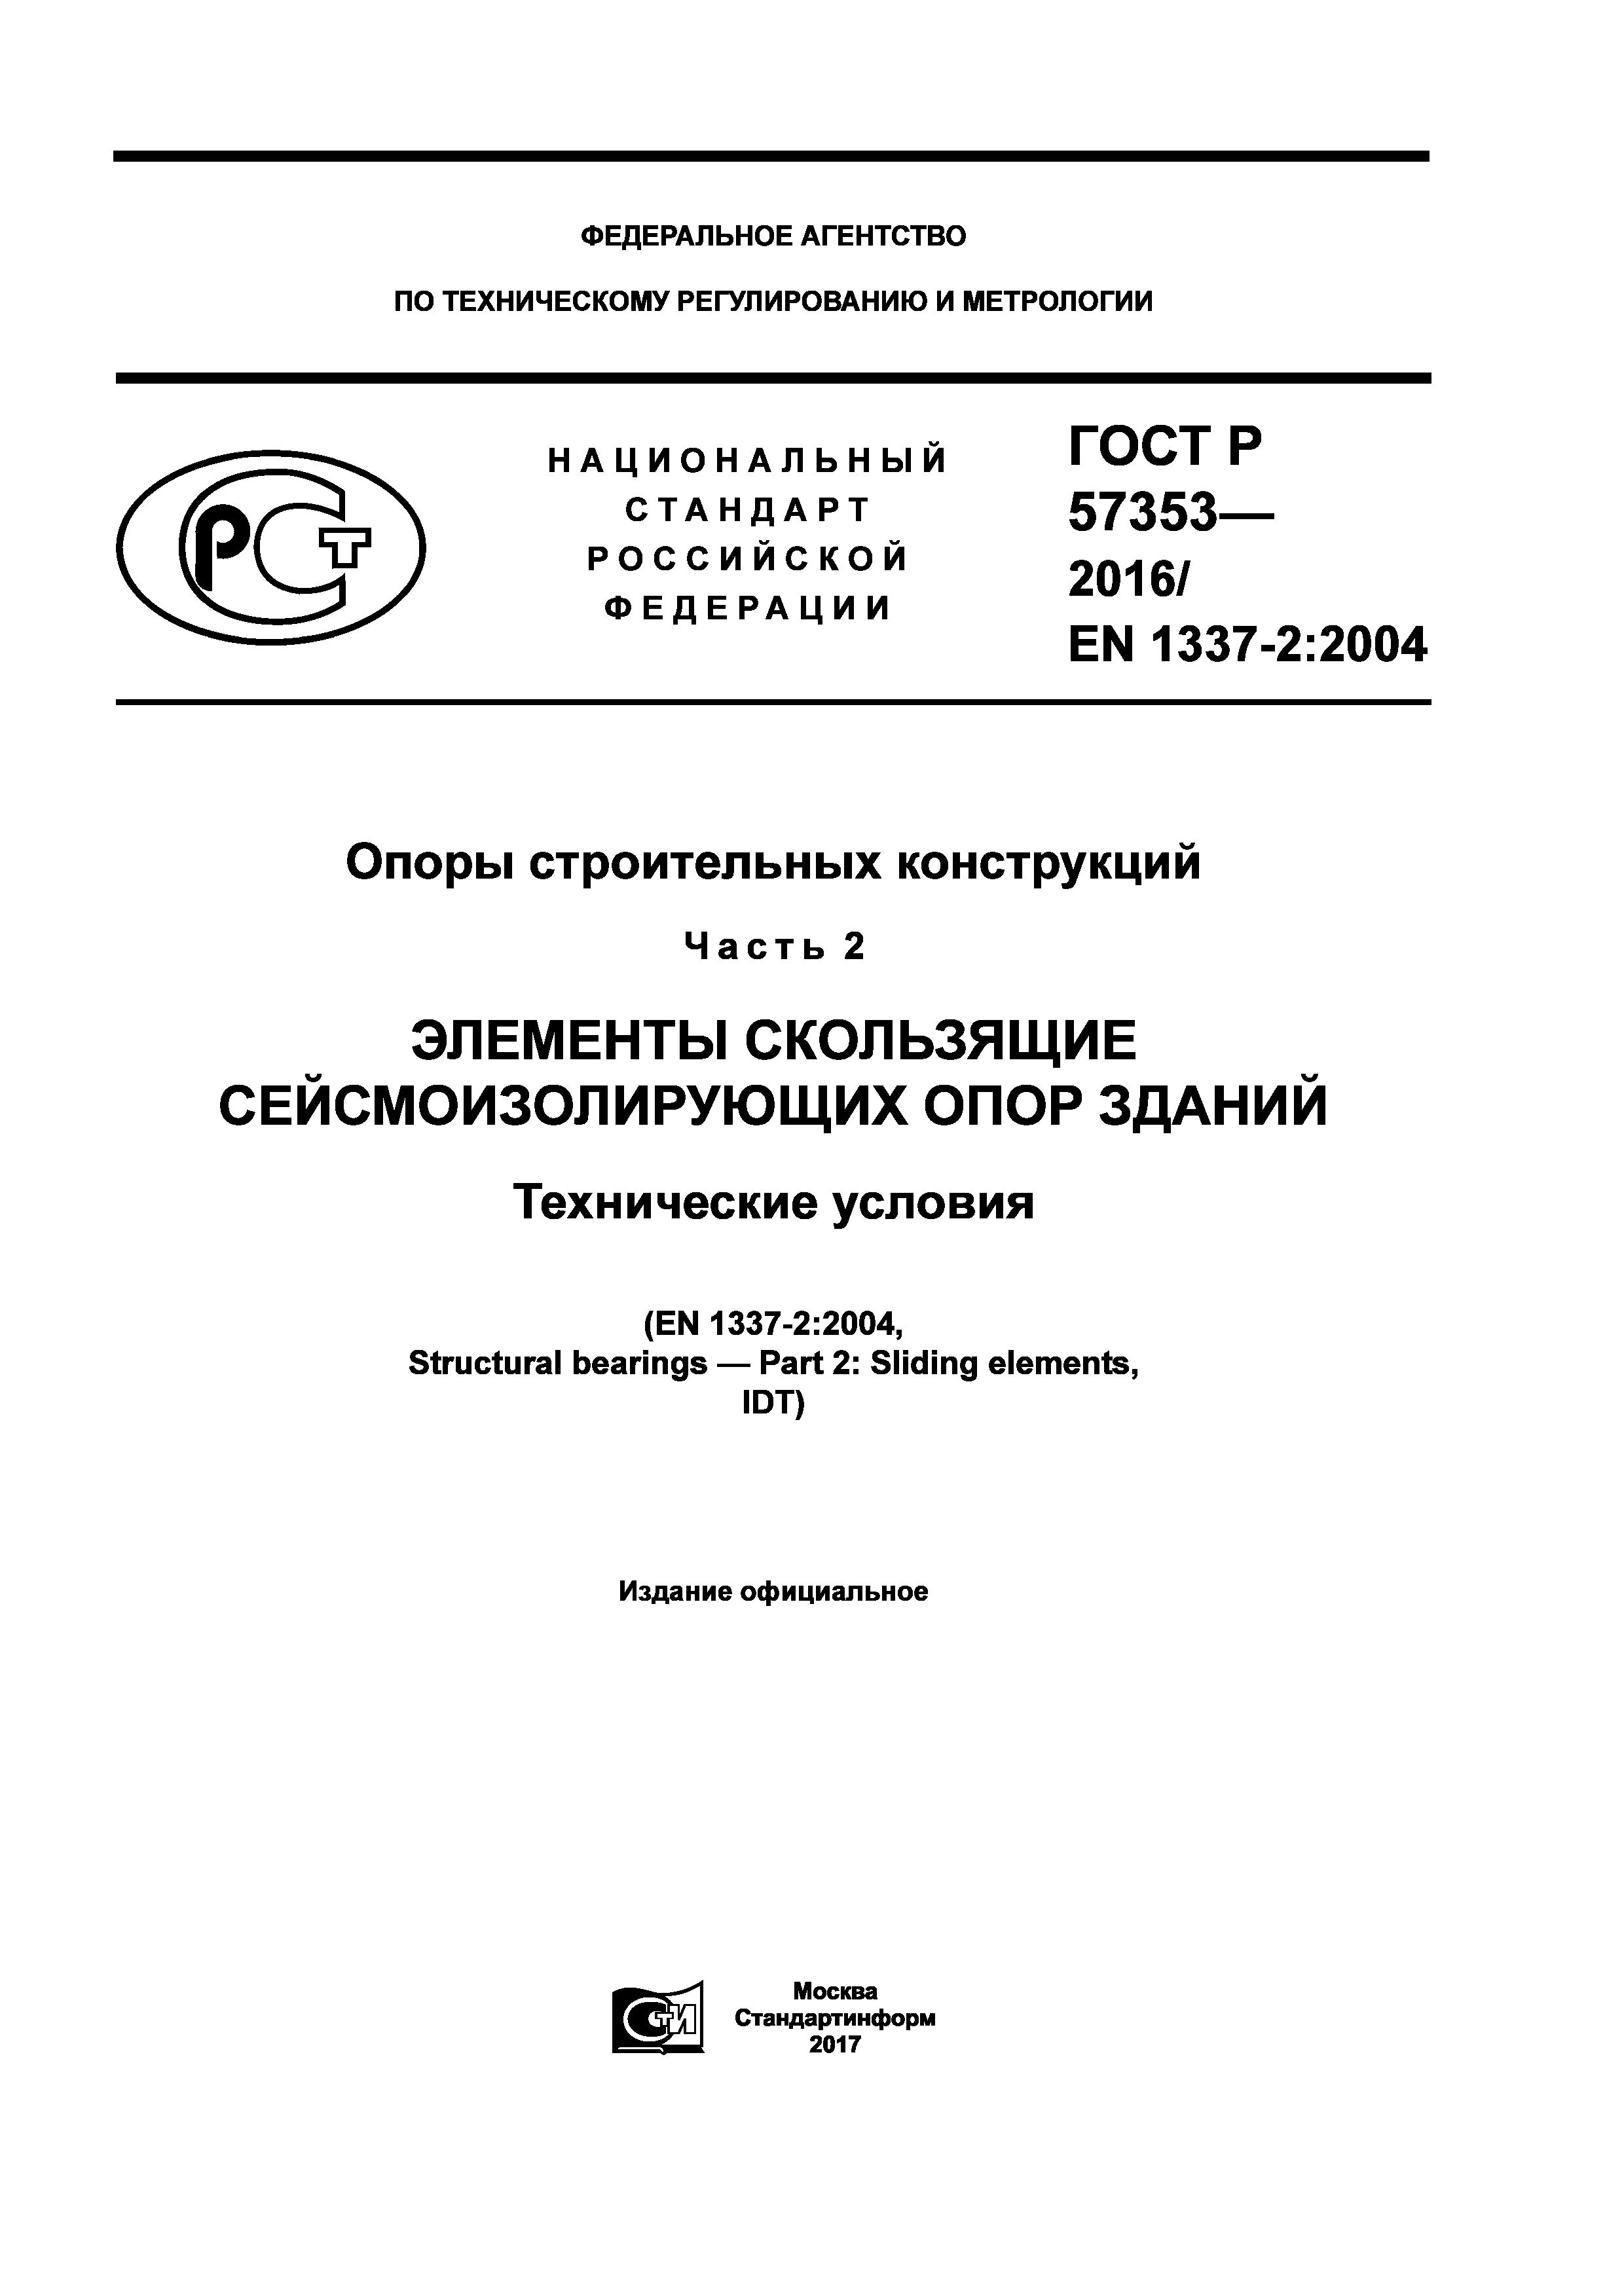 ГОСТ Р 57353-2016